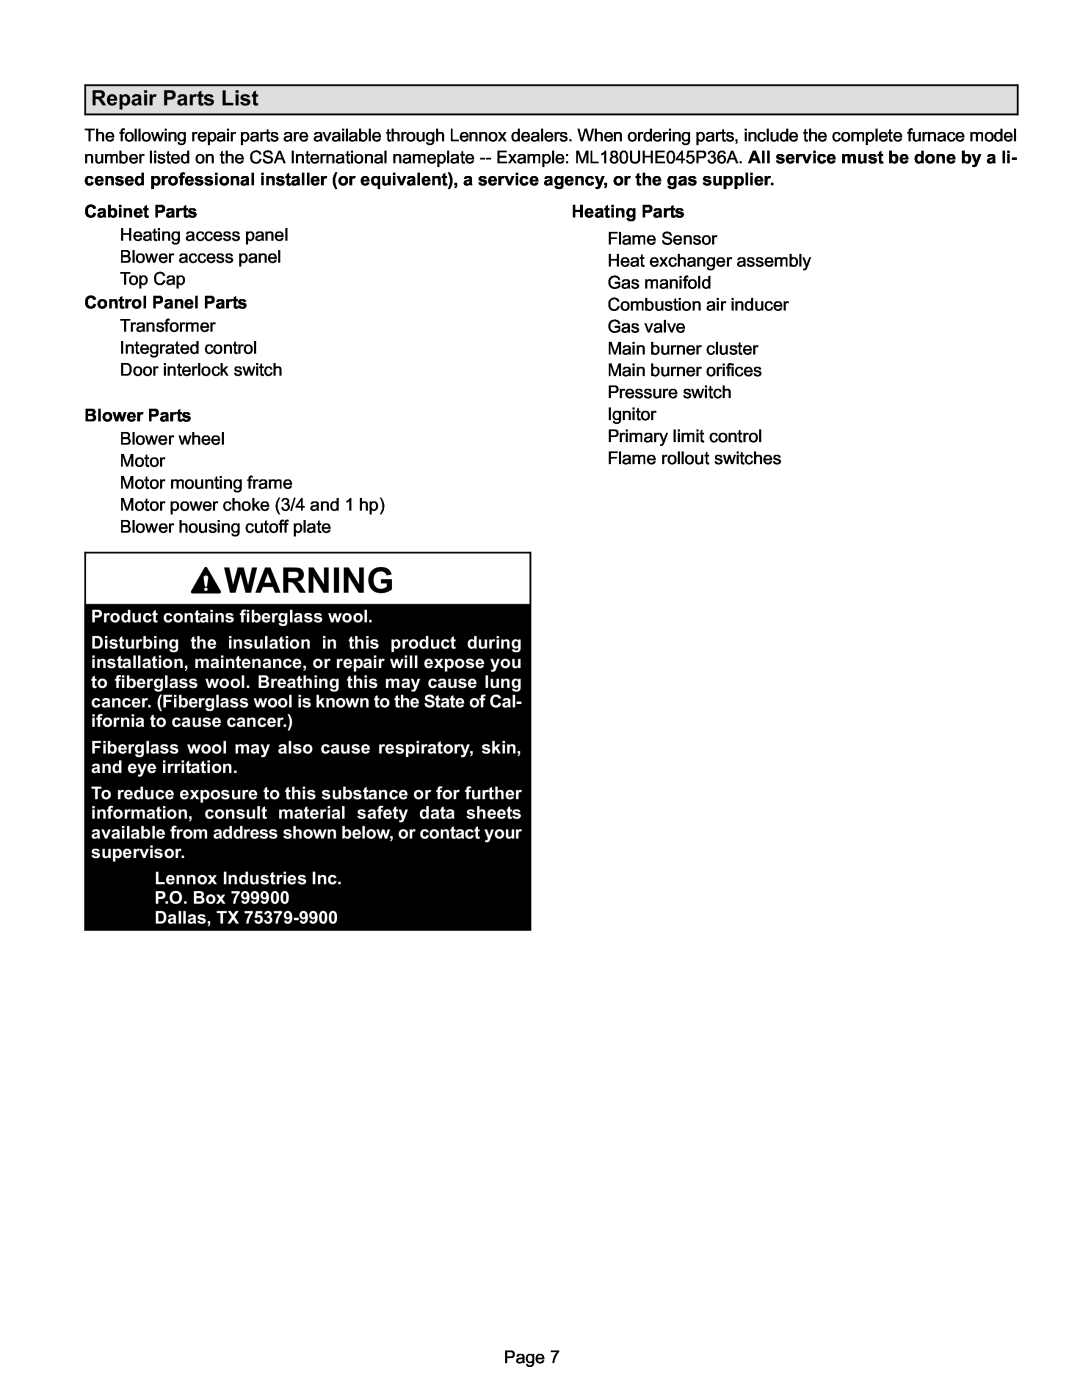 Lennox International Inc ML180UHE, Gas Furnace manual Repair Parts List 